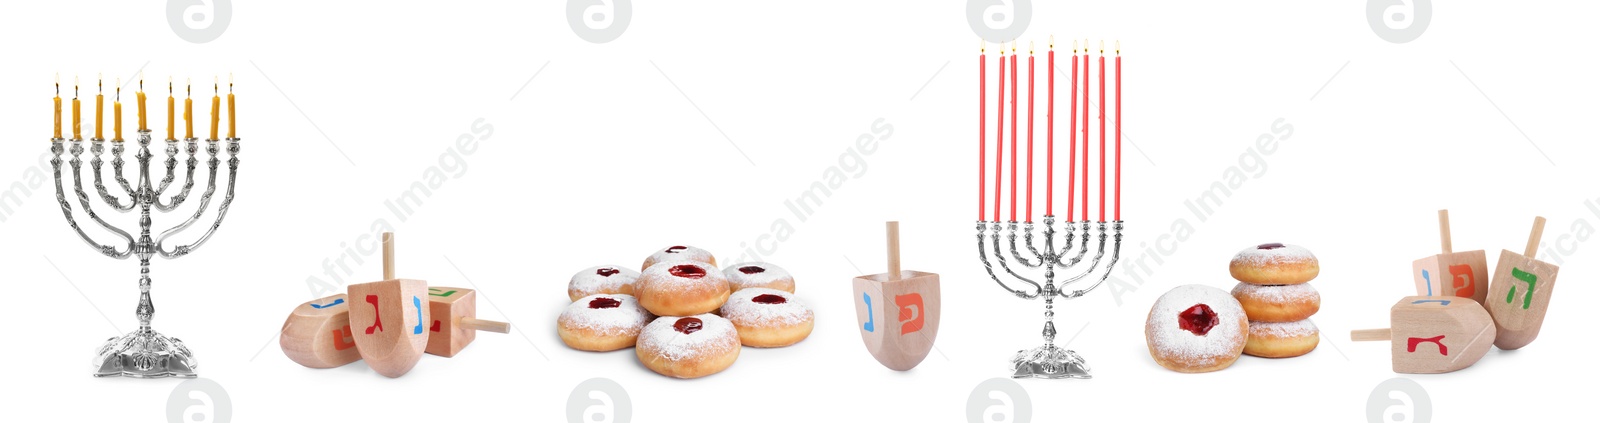 Image of Set with wooden dreidels, doughnuts and silver menorahs on white background, banner design. Hanukkah celebration